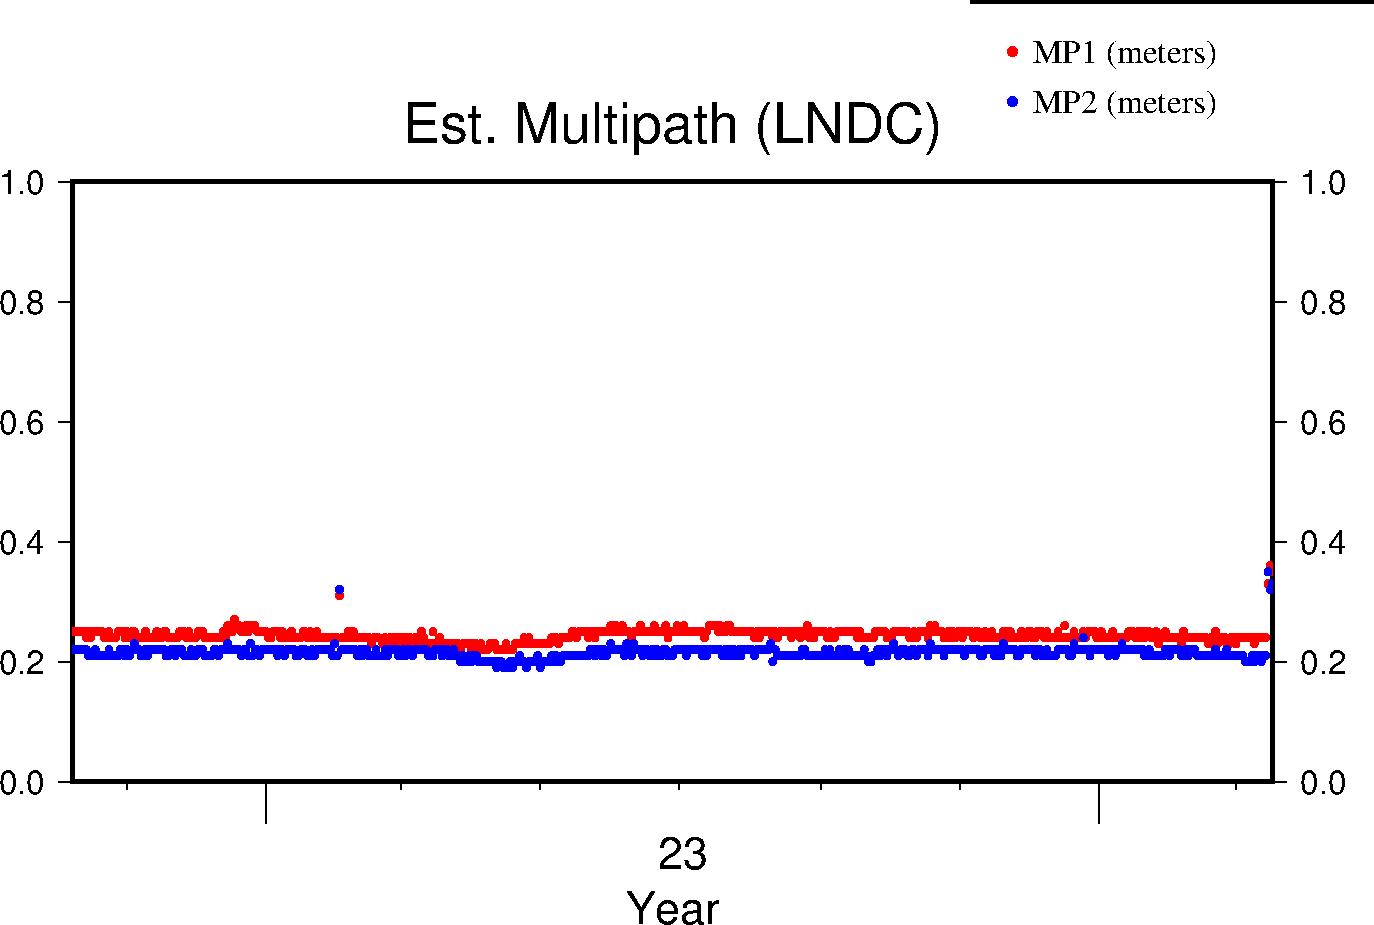 LNDC multipath lifetime